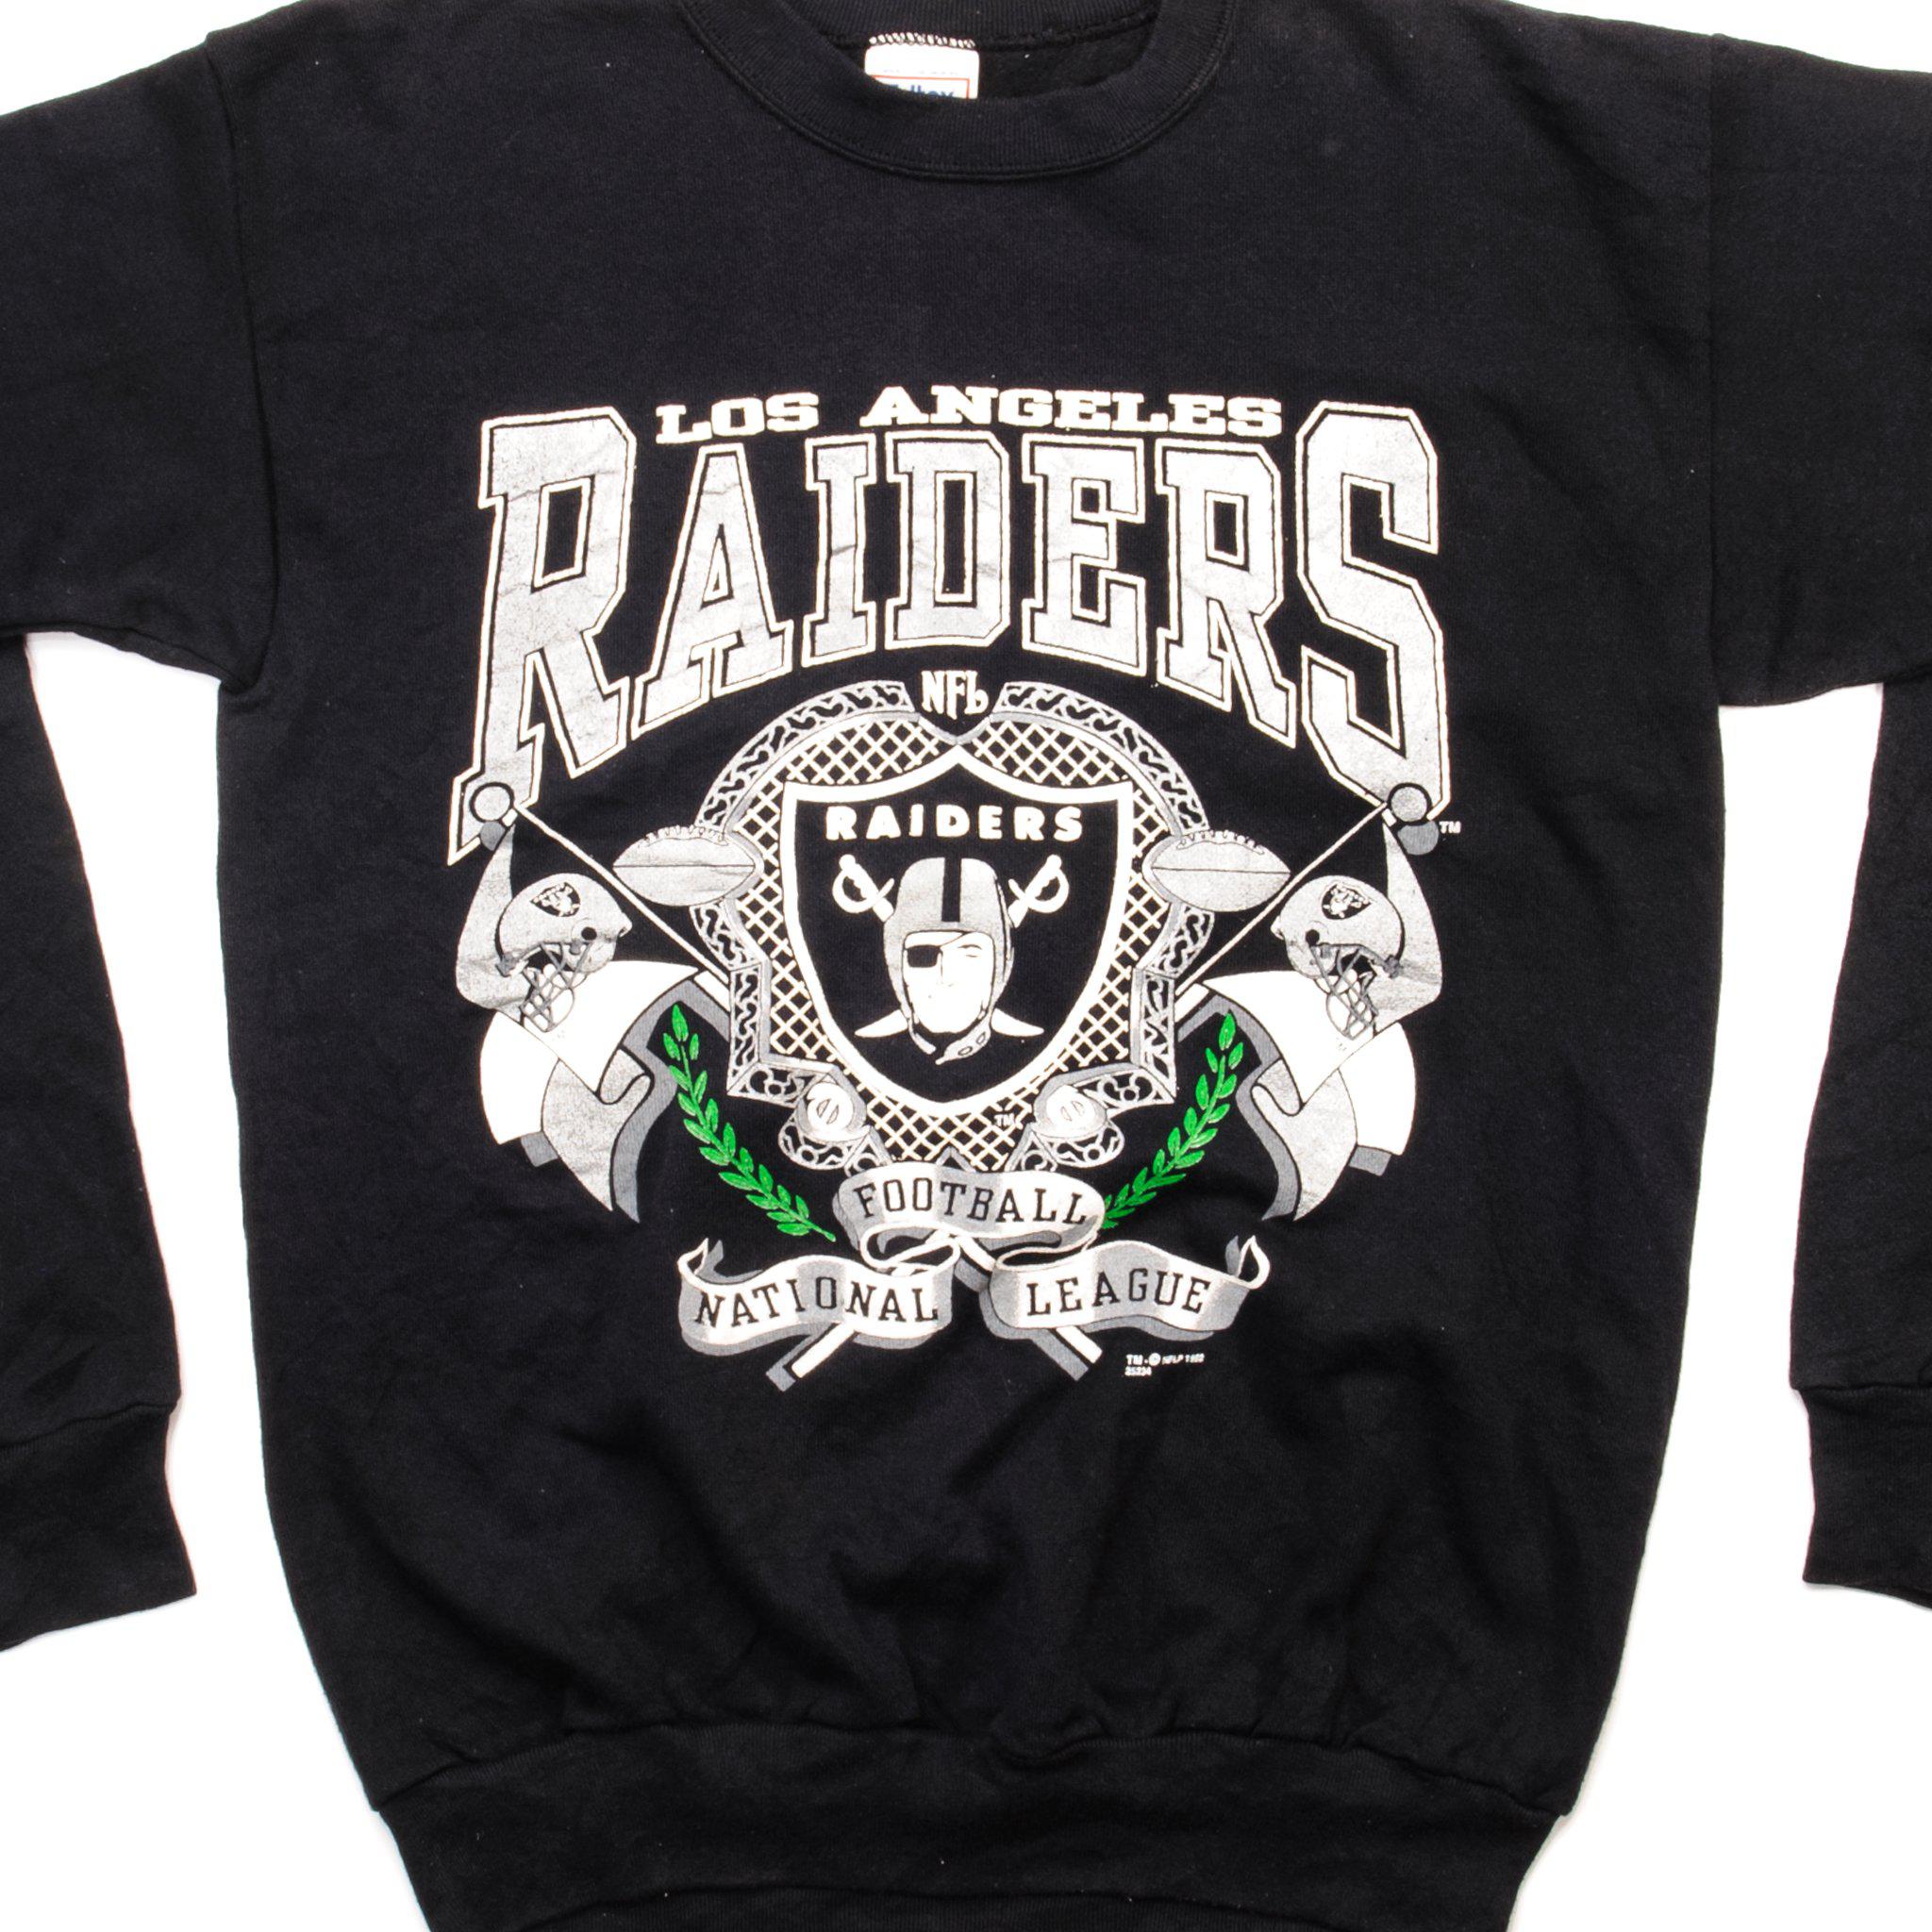 Vintage NFL Los Angeles Raiders Sweatshirt 1992 Size Large Made in USA